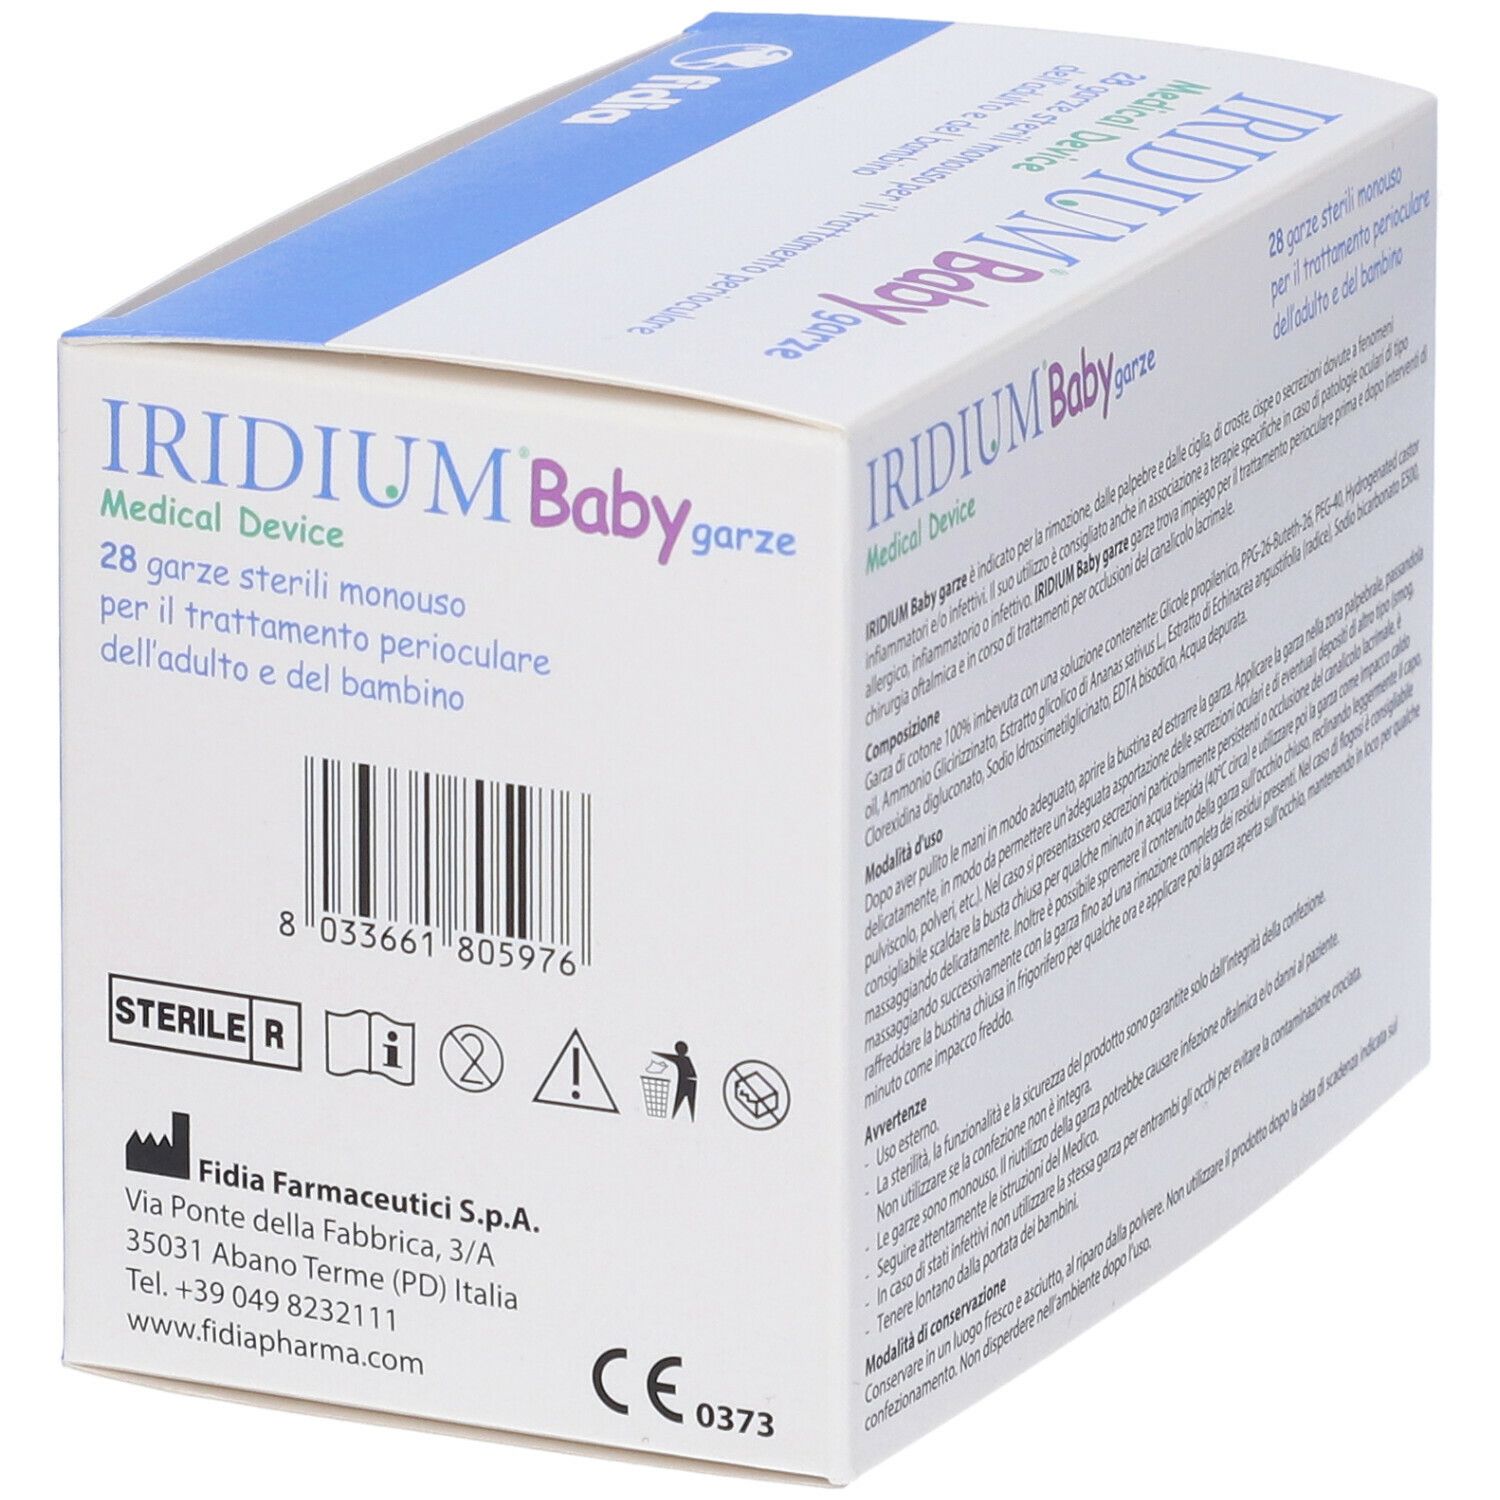 Iridium® Baby Garze Sterili Monouso